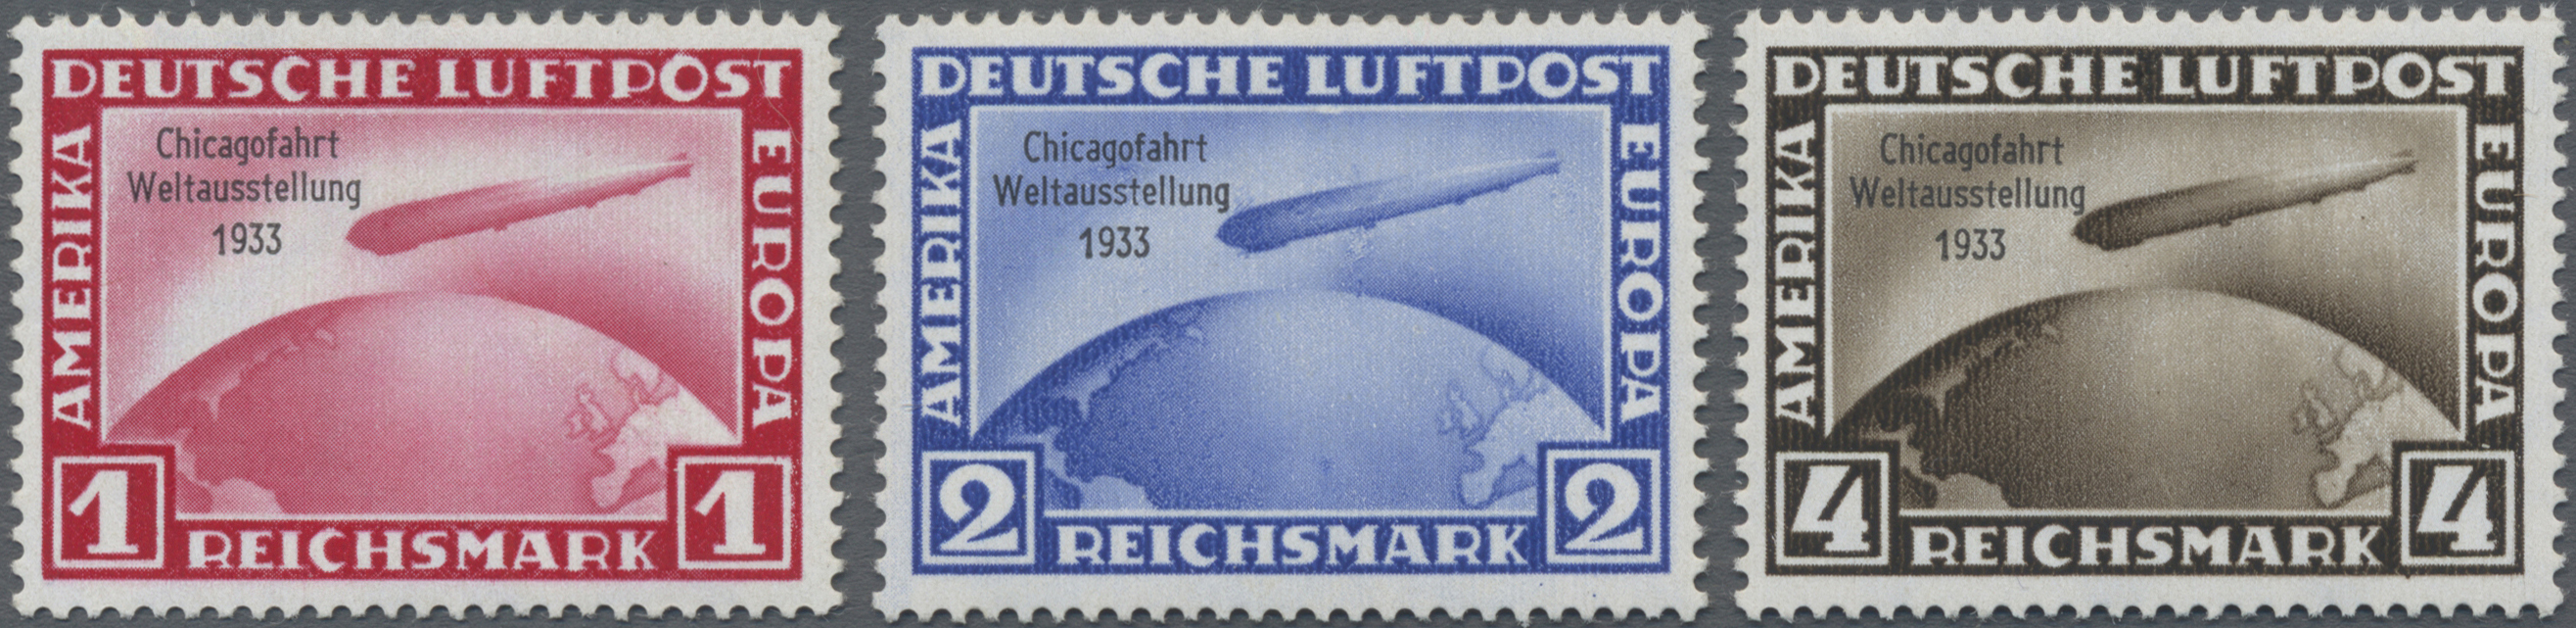 Lot 03388 - Deutsches Reich - 3. Reich  -  Auktionshaus Christoph Gärtner GmbH & Co. KG 53rd AUCTION - Day 3 Germany